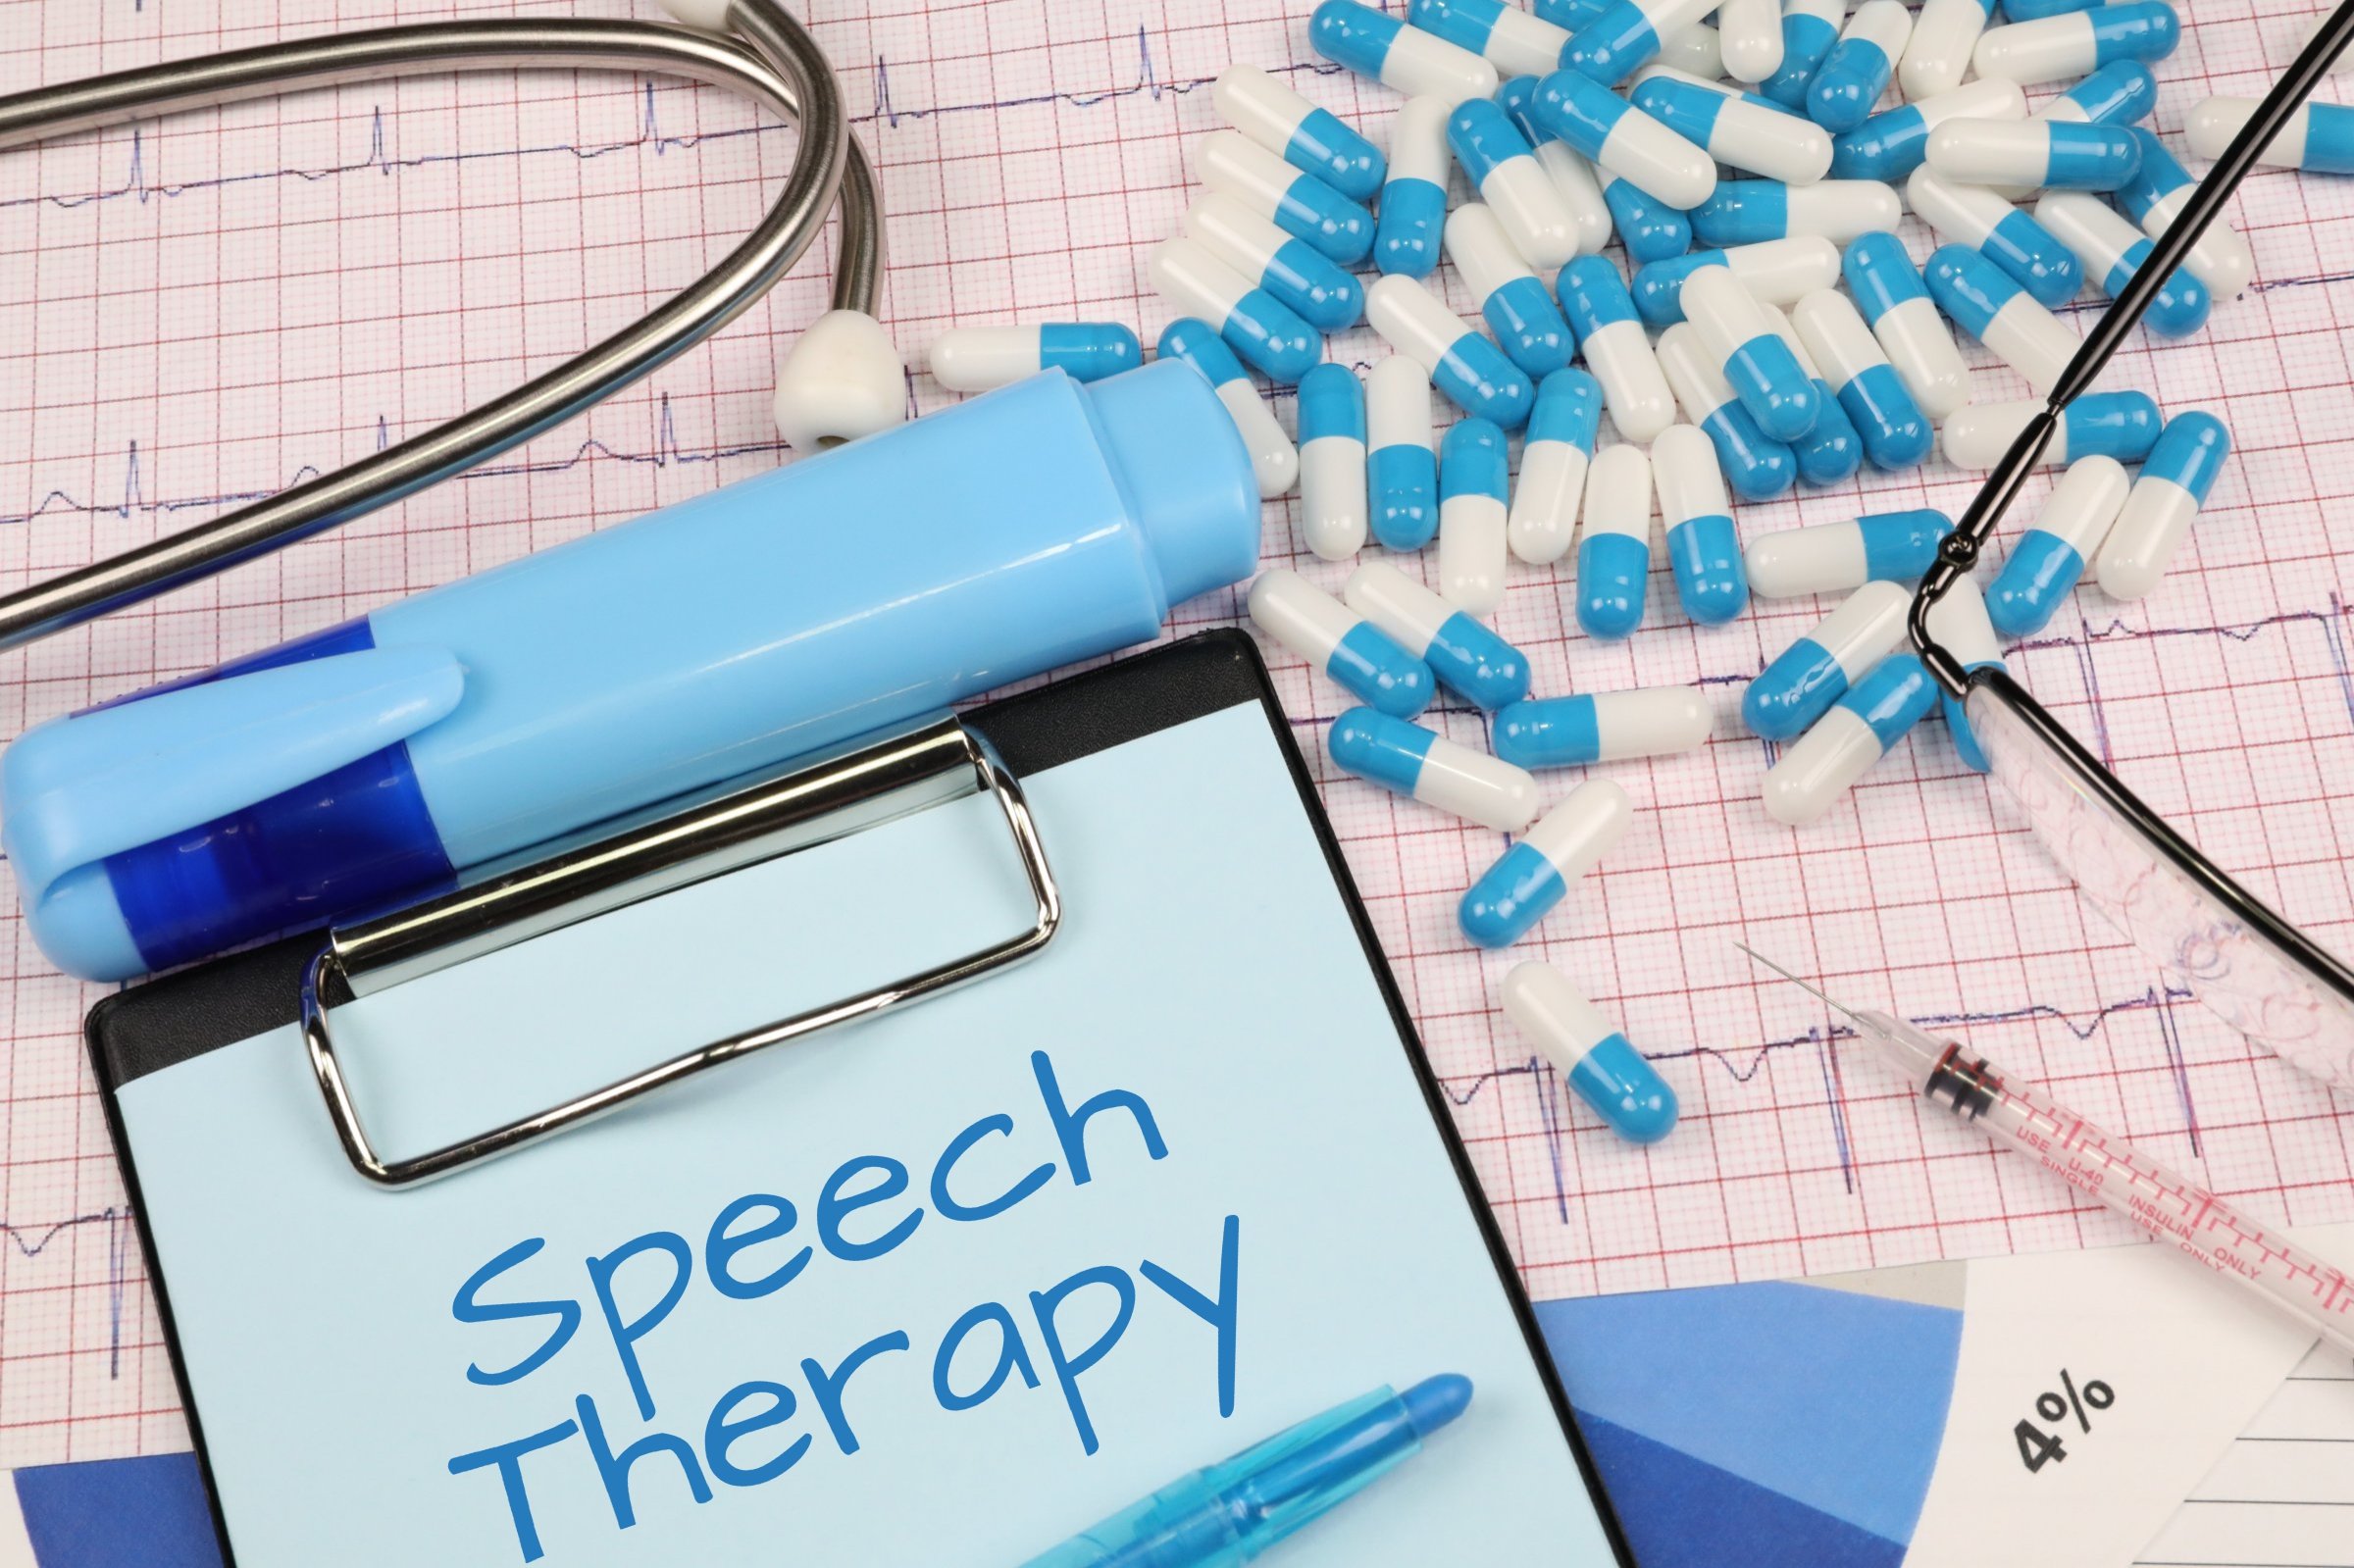 speech therapy